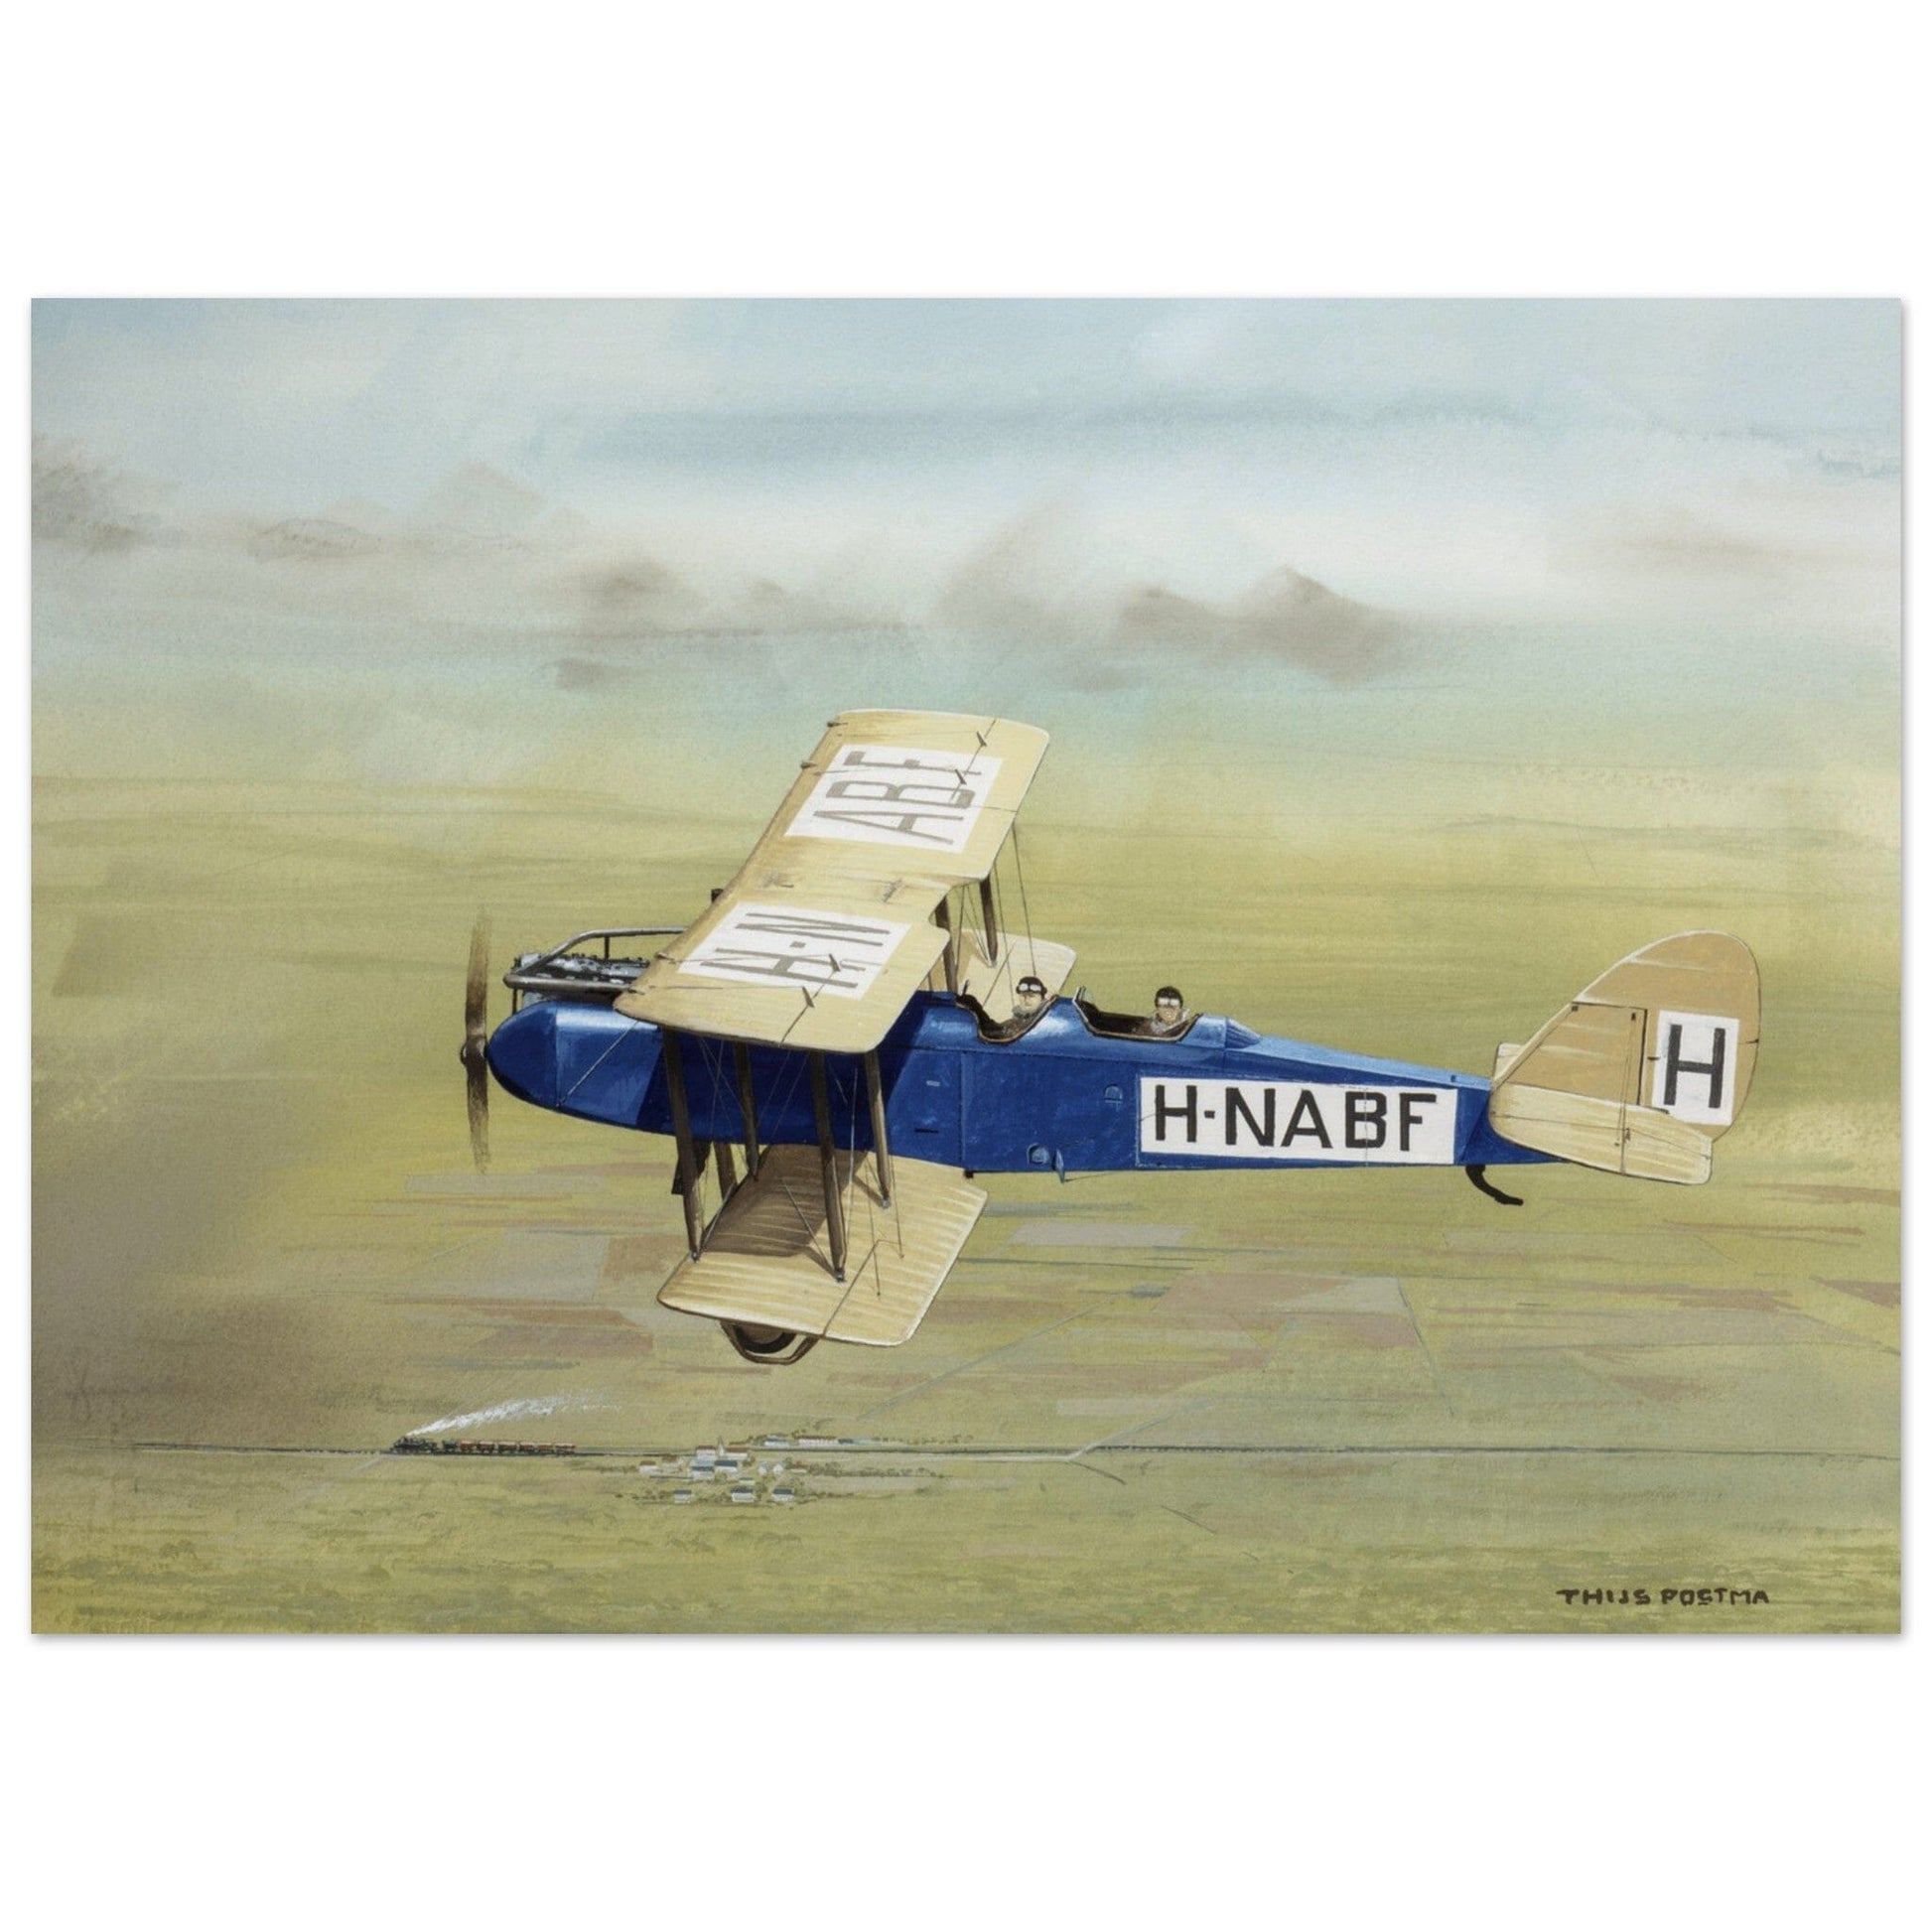 Thijs Postma - Poster - De Havilland DH.9 Over Railroad Tracks Poster Only TP Aviation Art 50x70 cm / 20x28″ 